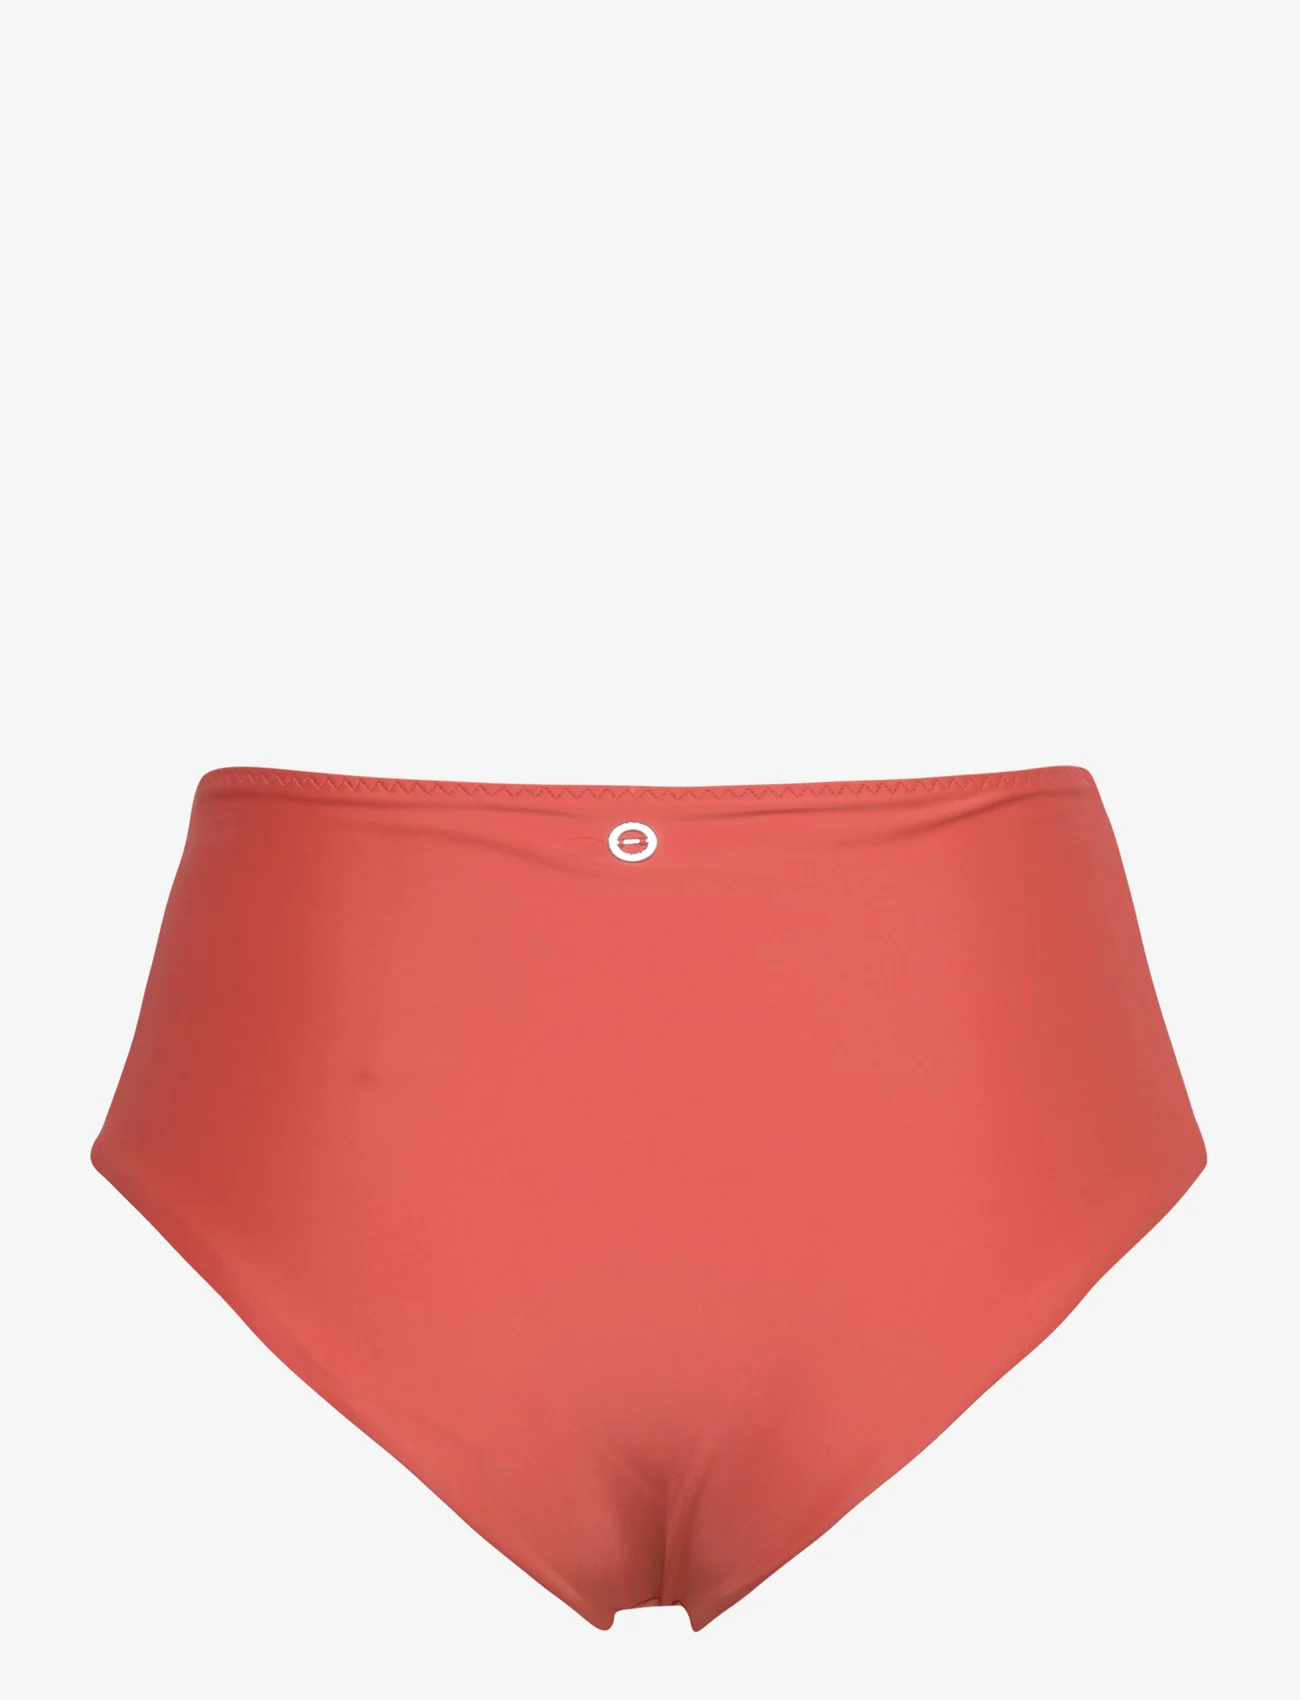 Casall - High Waist Bikini Hipster - bikinibroekjes met hoge taille - dk papaya red - 1